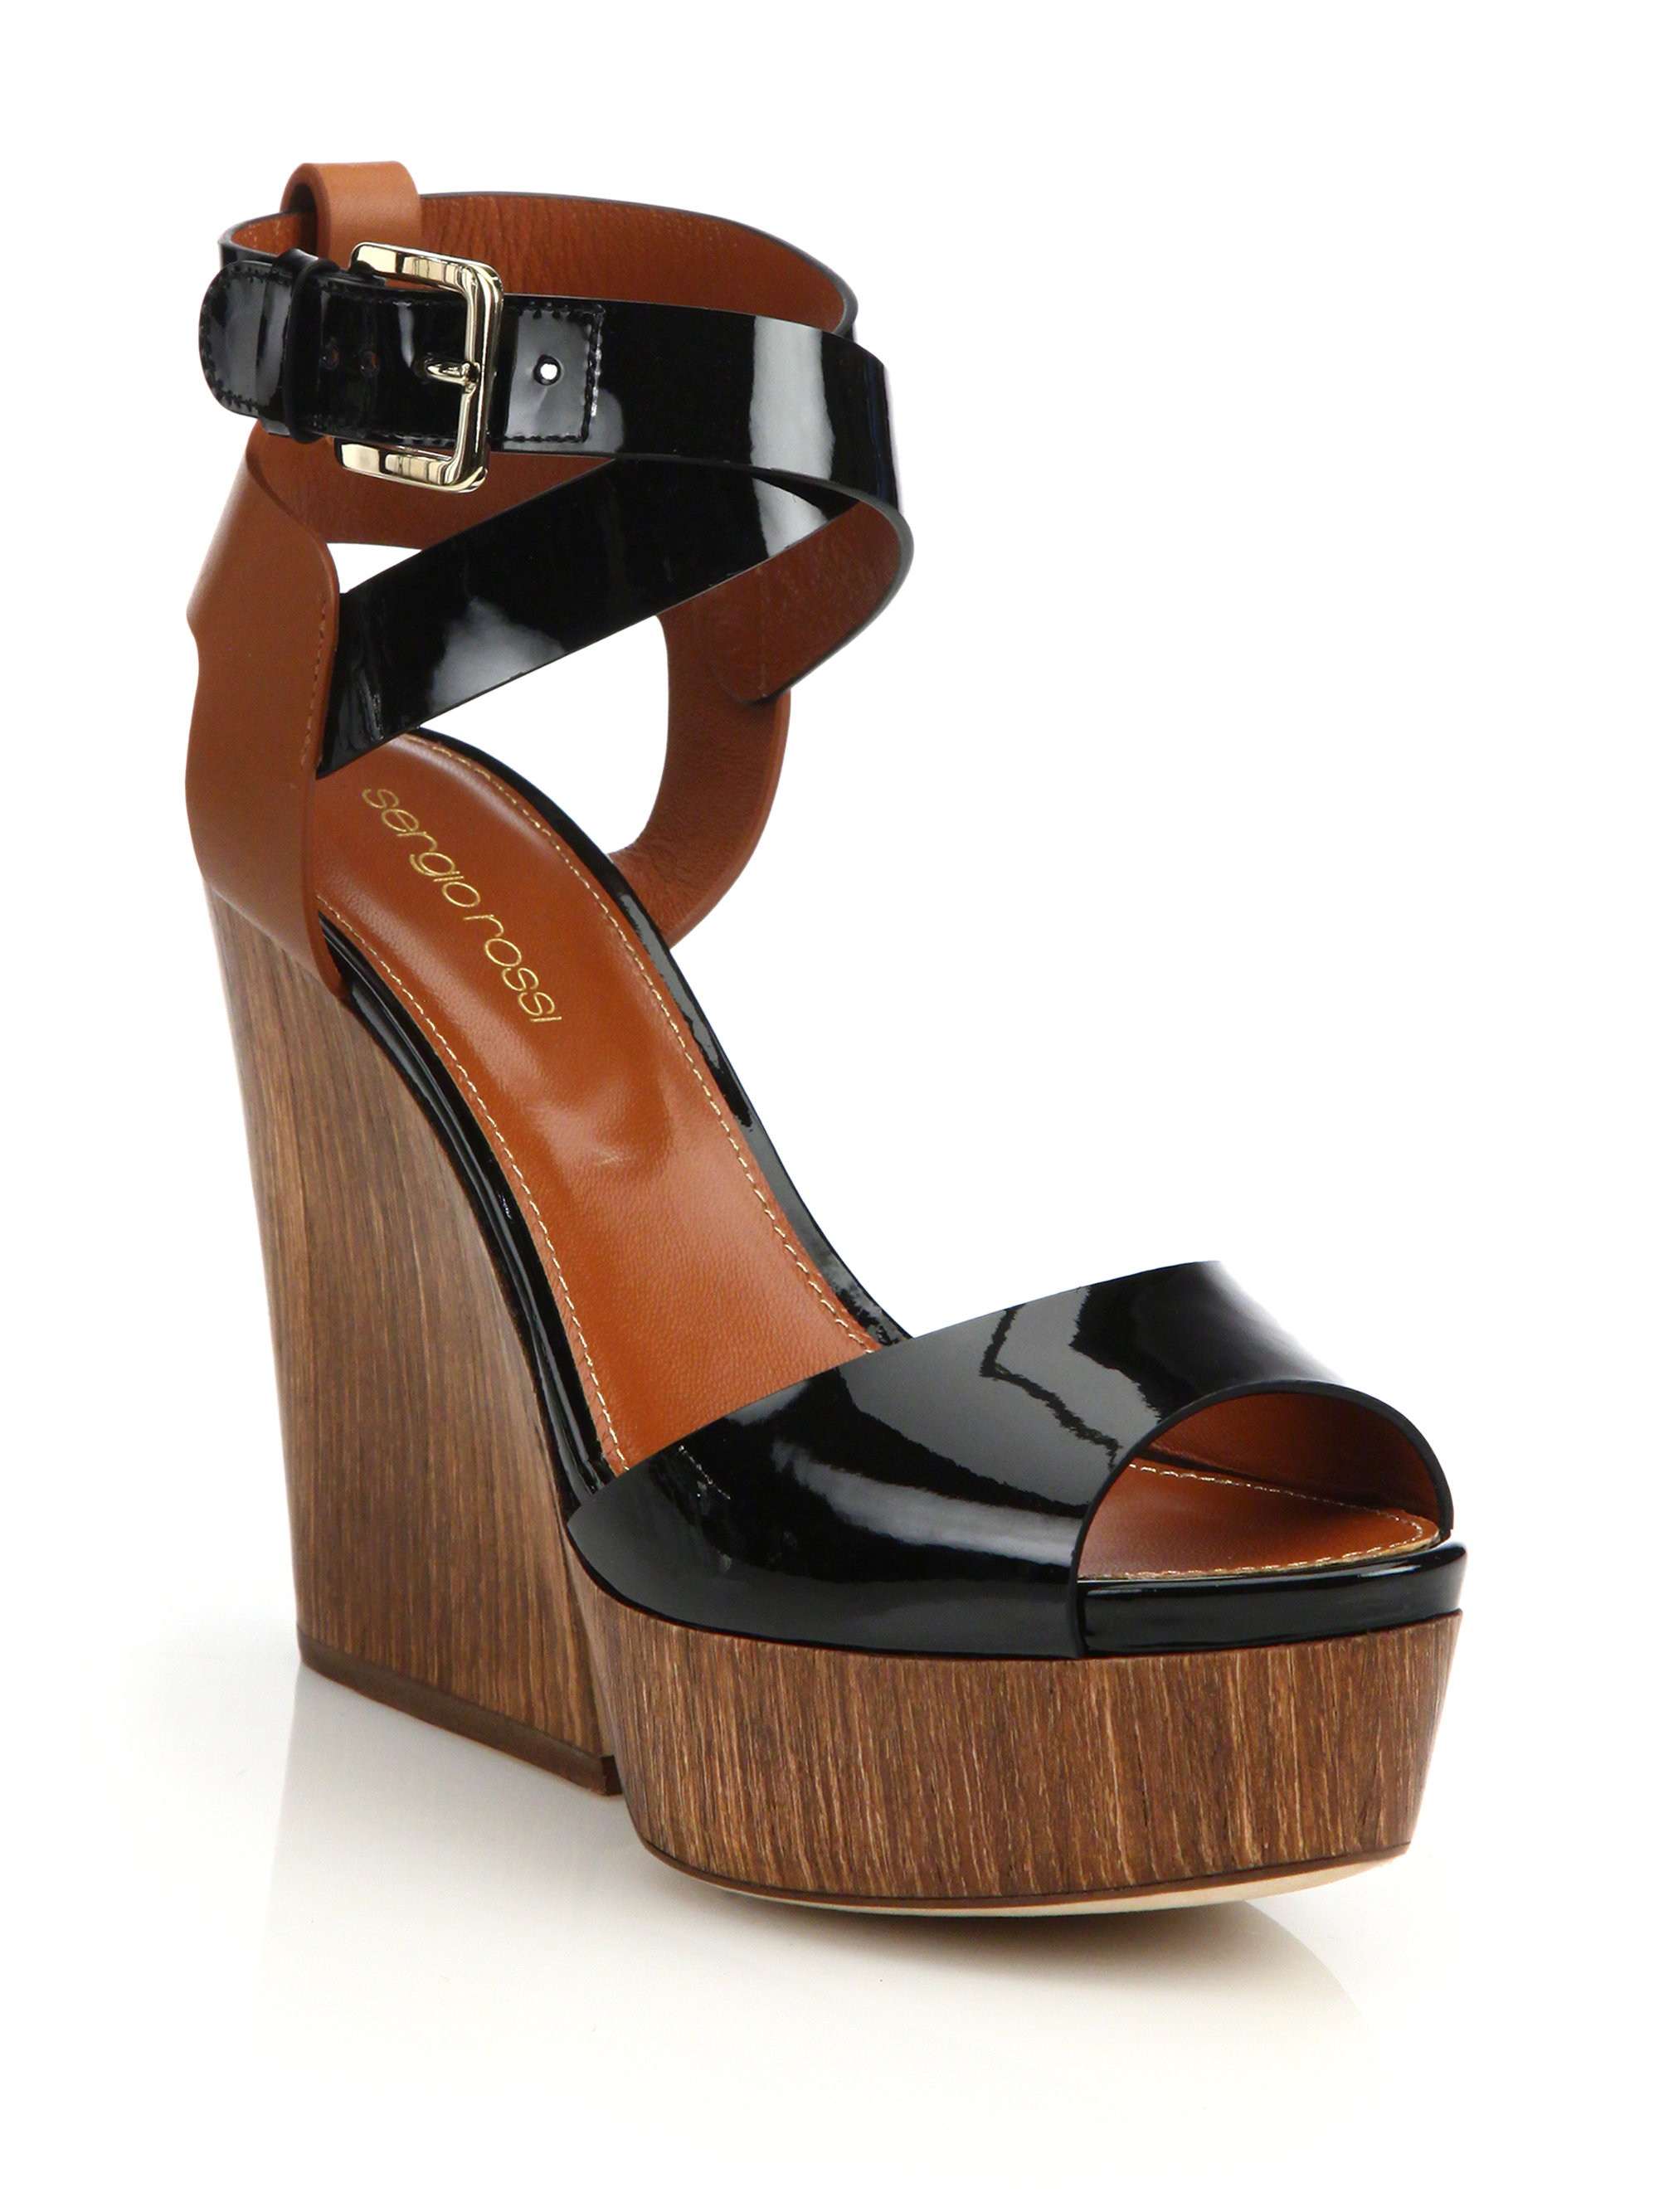 Sergio rossi Capri Wooden Wedge Sandals in Black | Lyst